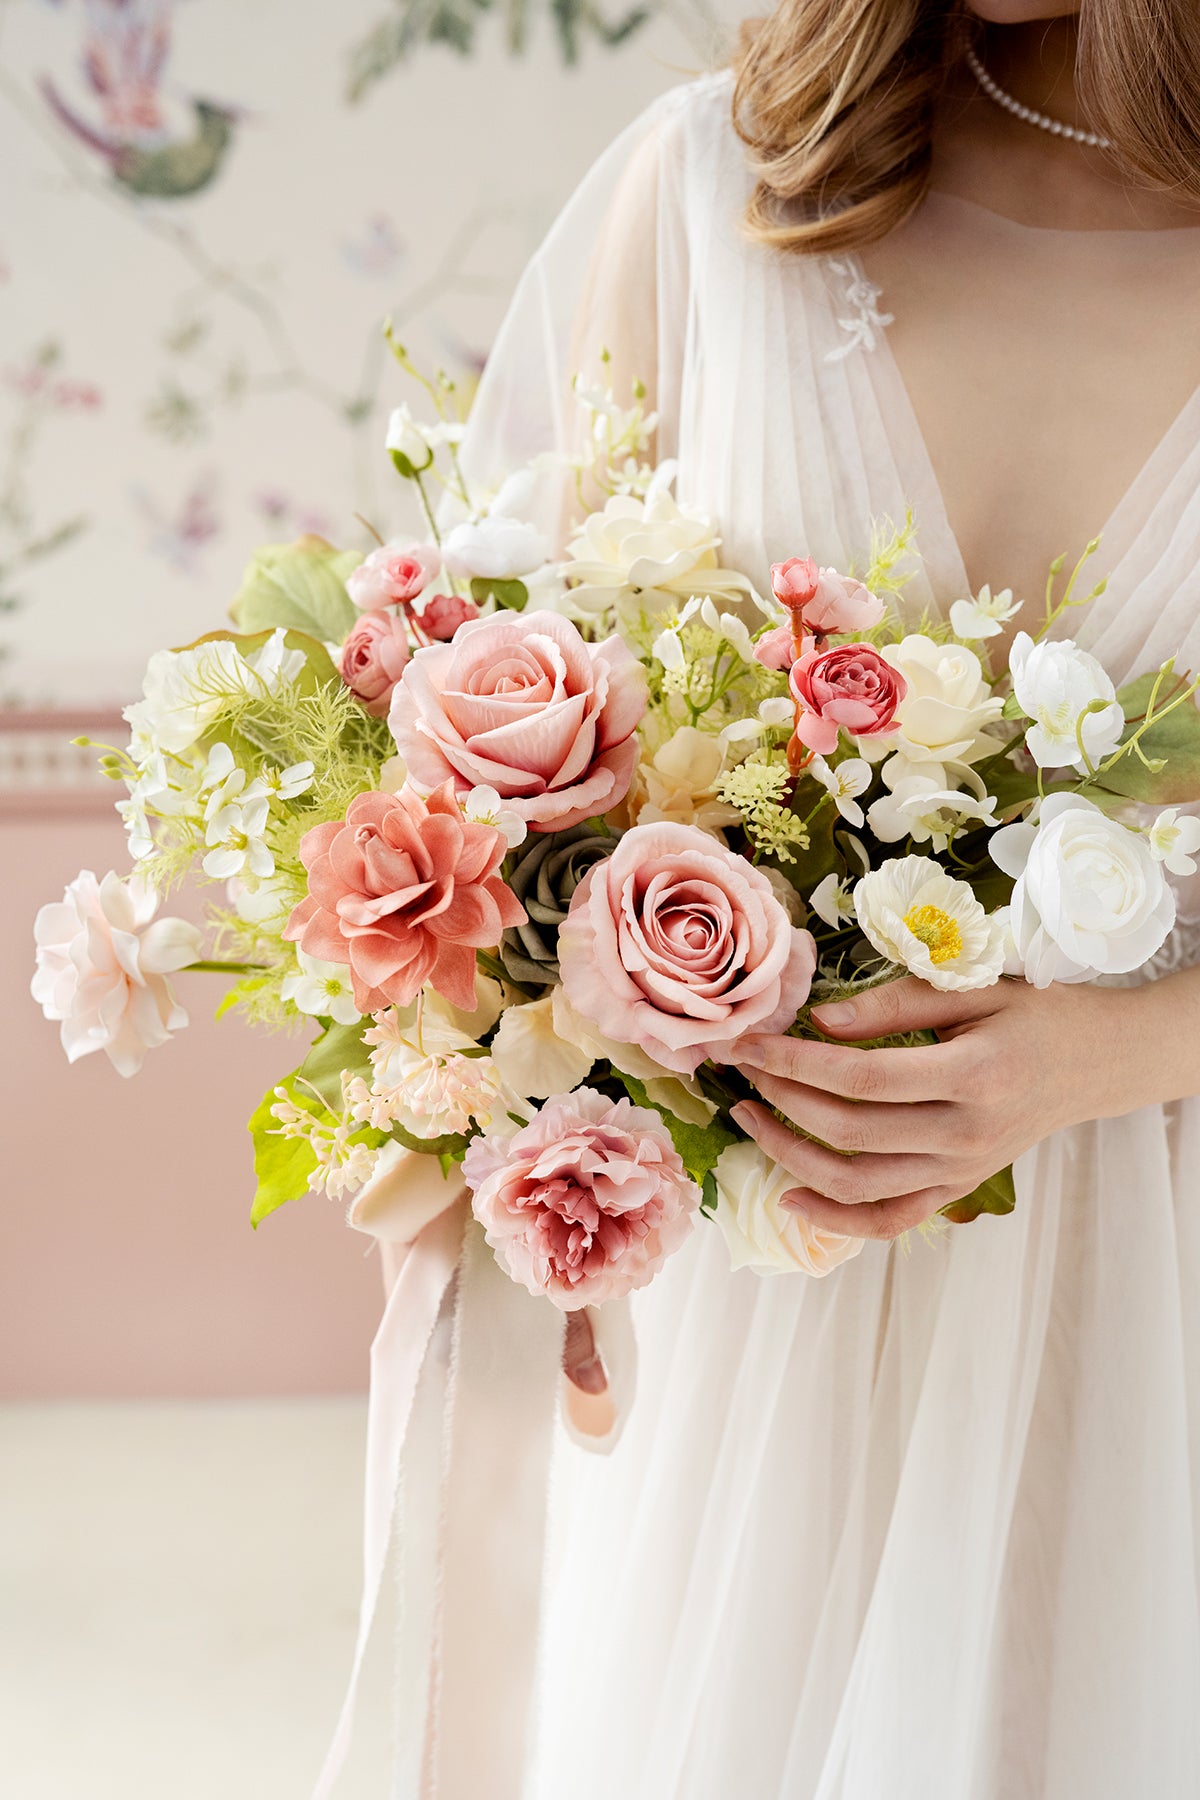 Small Free-Form Bridal Bouquet in Garden Blush